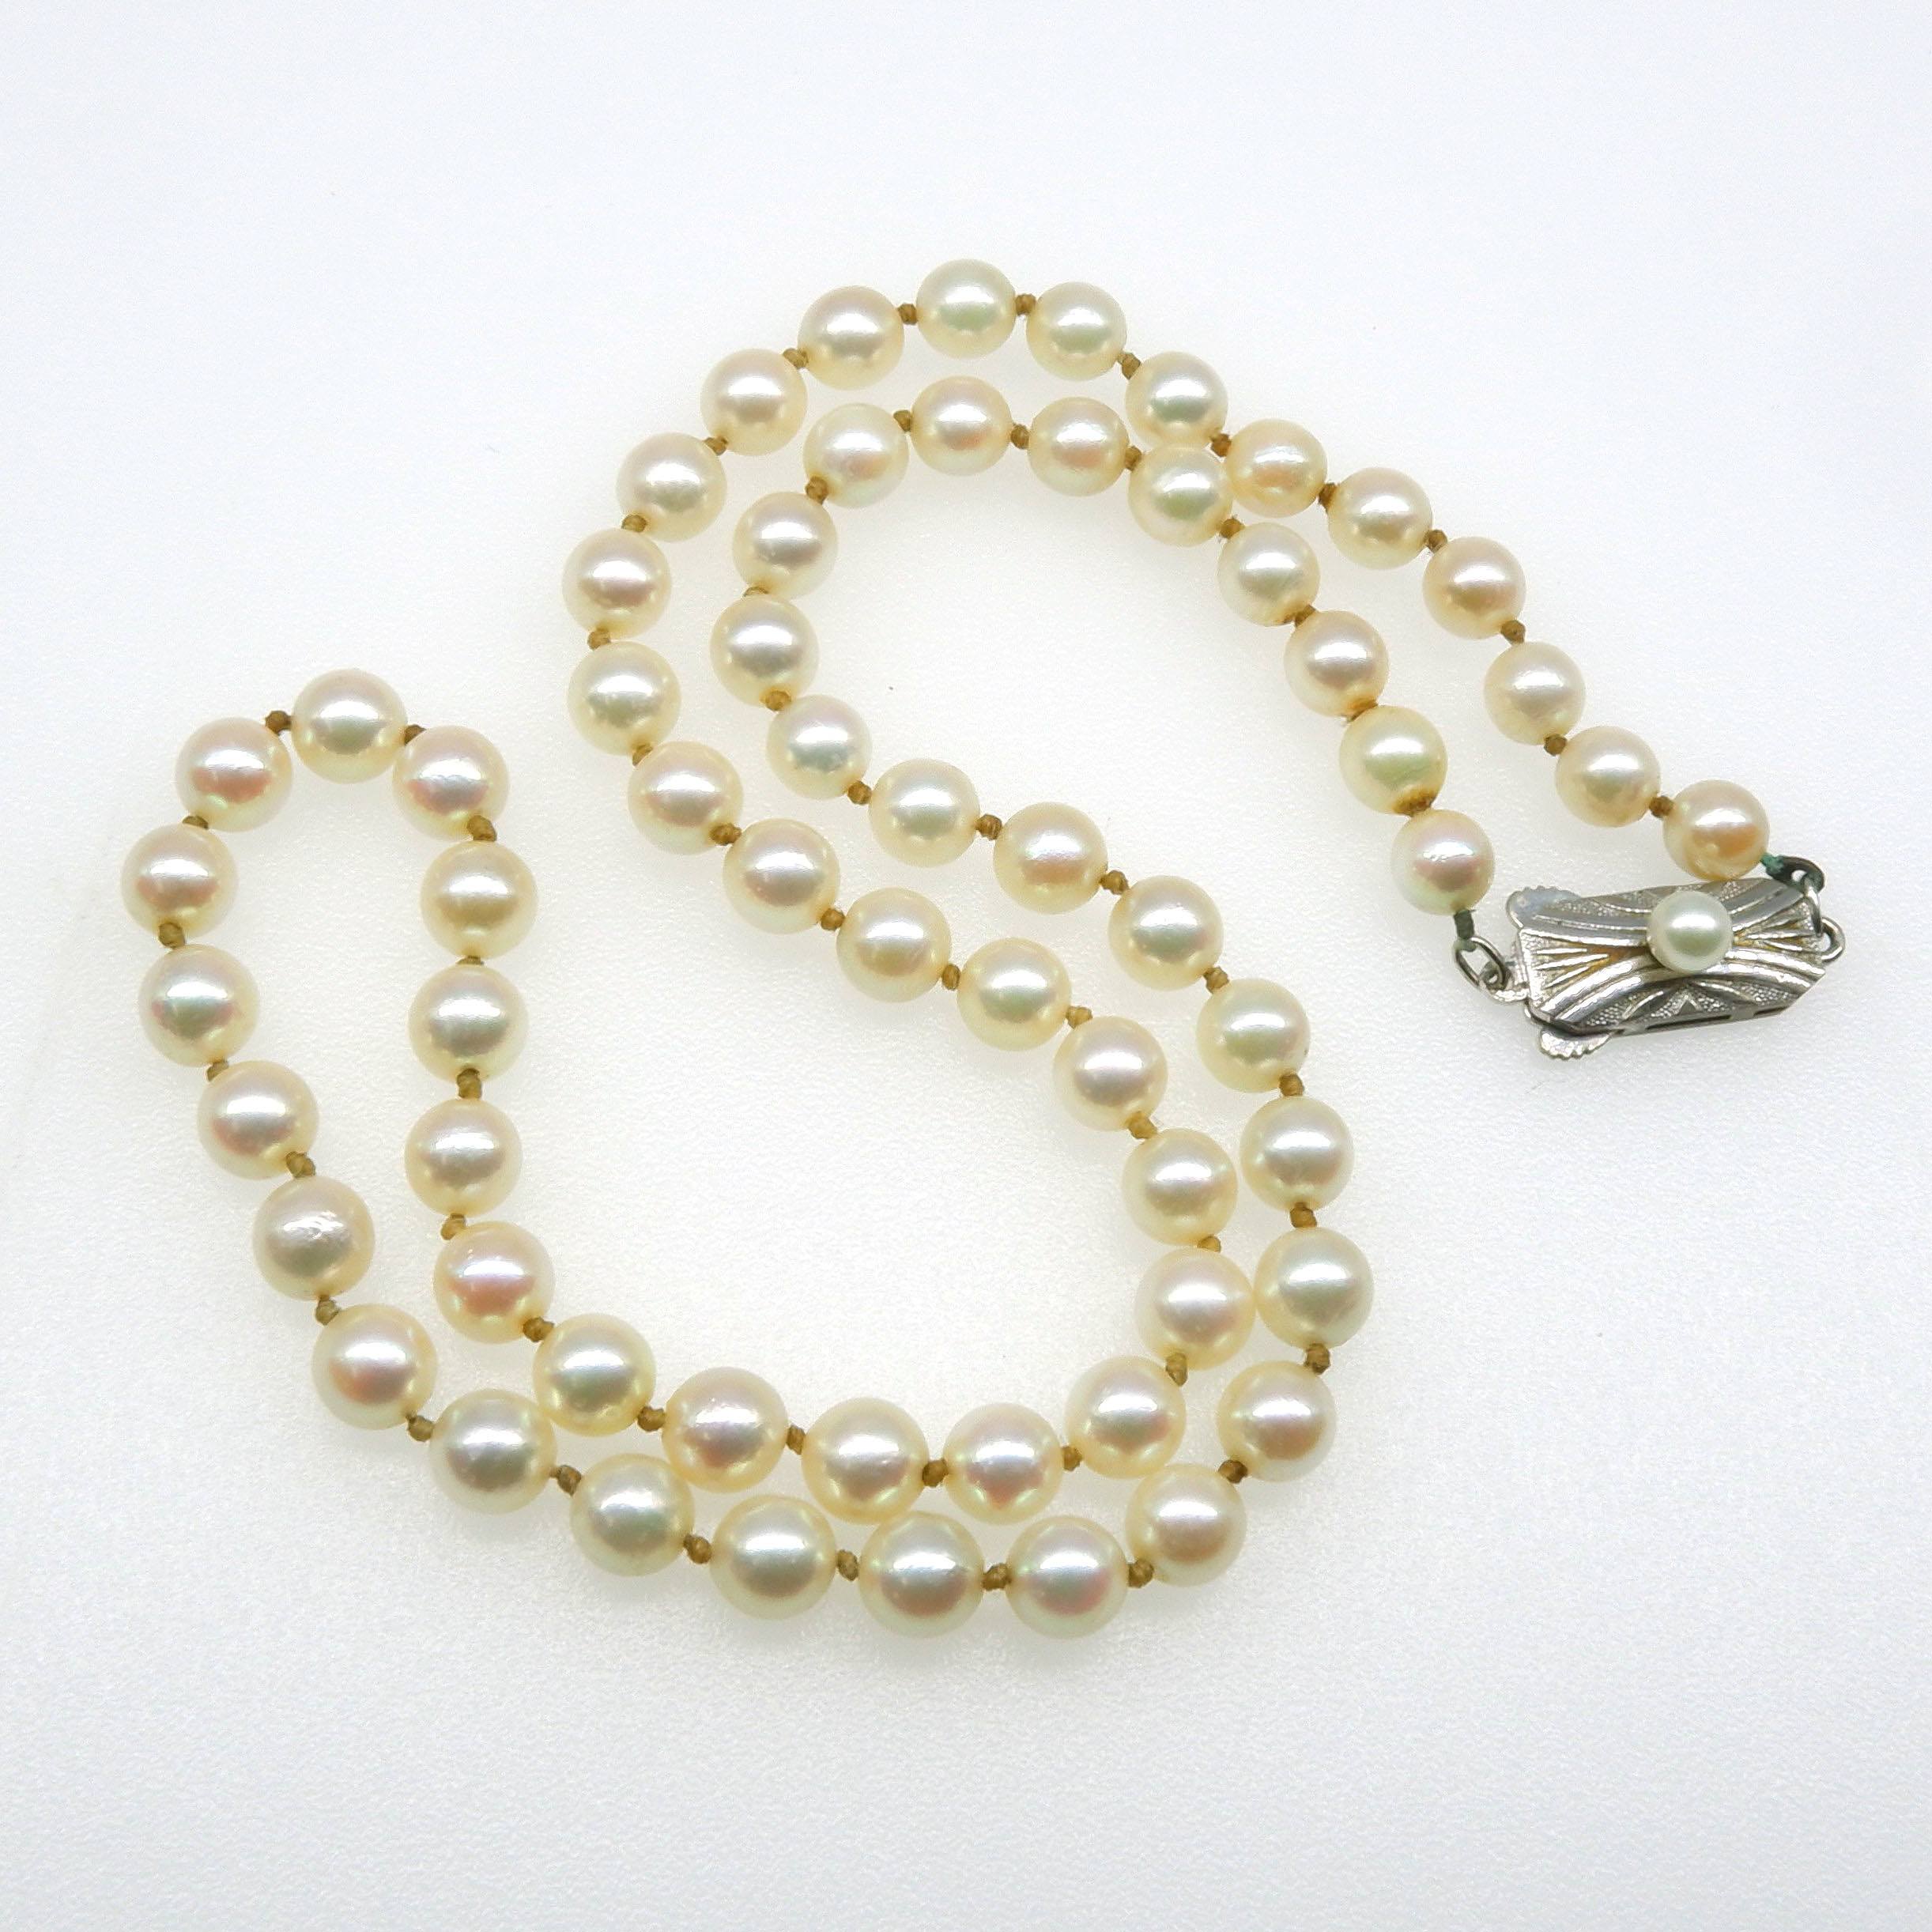 'Mikimoto Type Short Strand of Pearls'